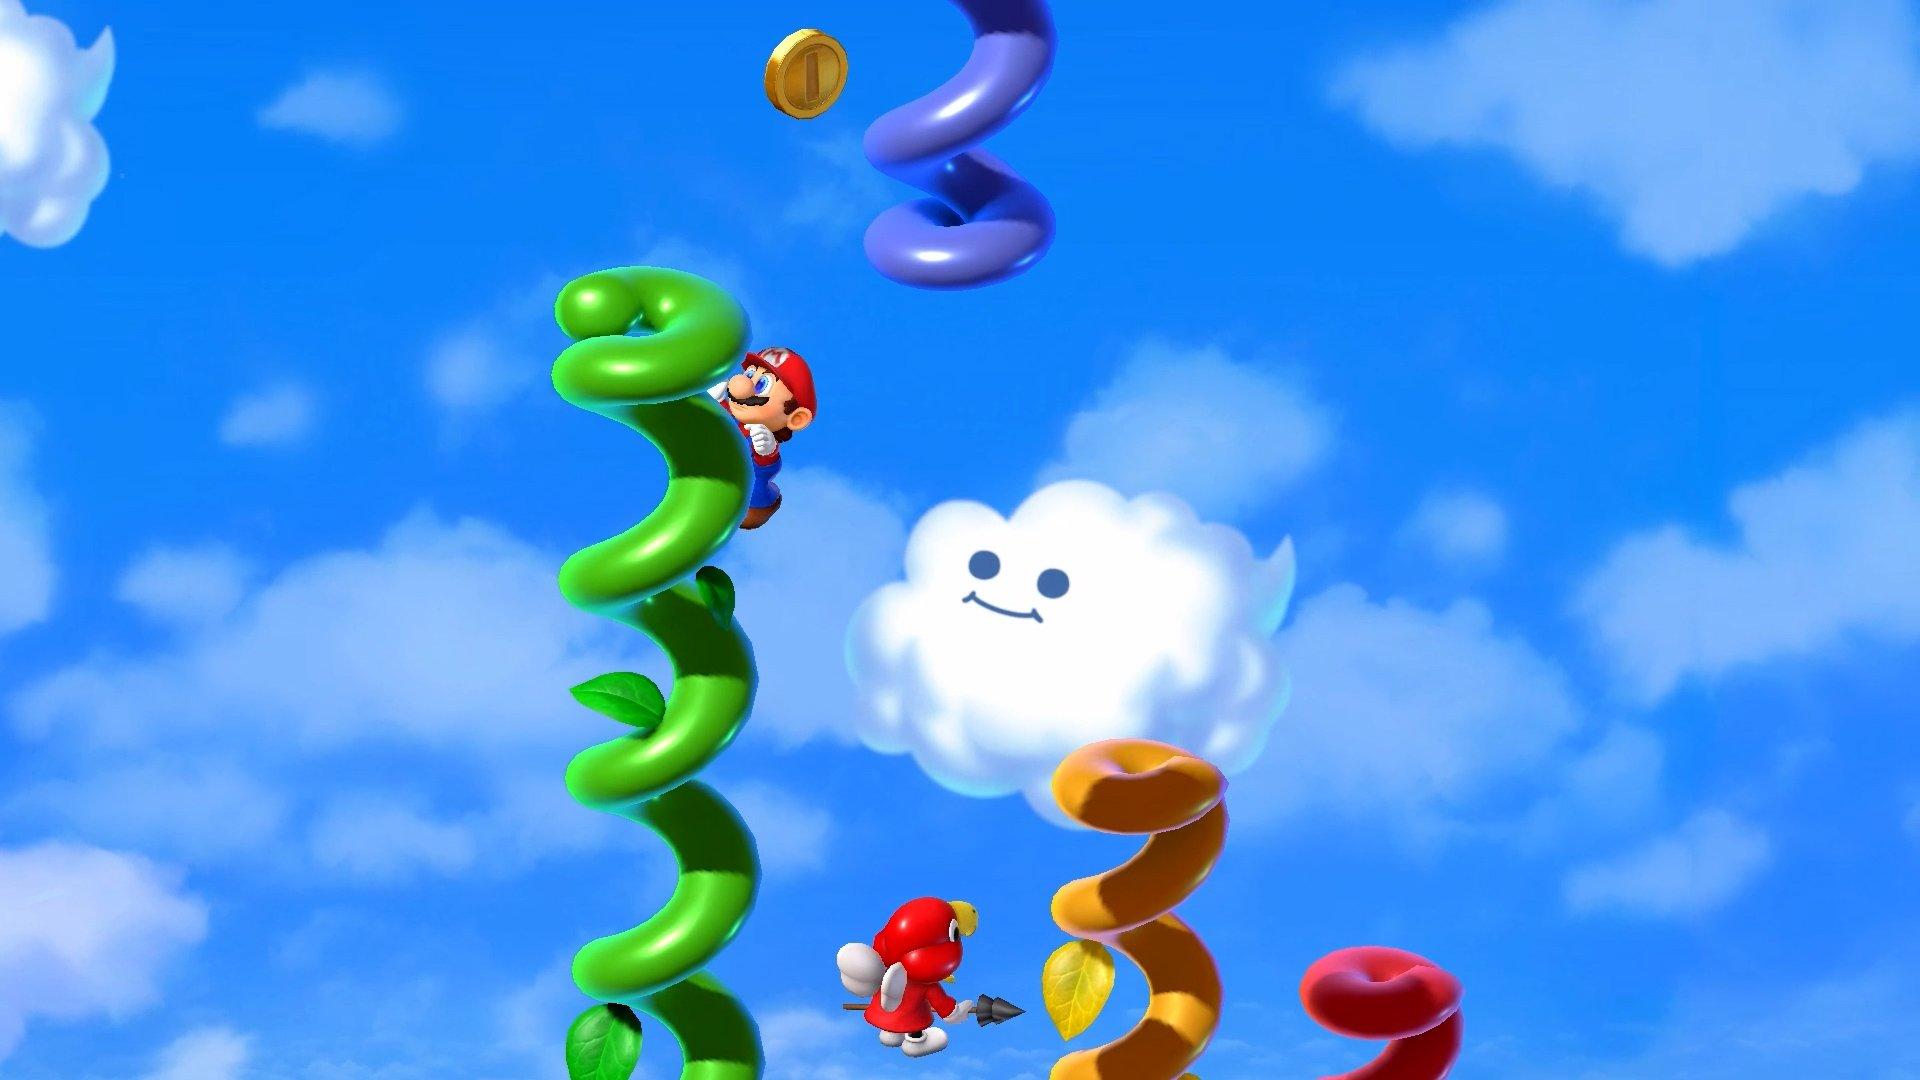 Super Mario Bros RPG - Nintendo Switch Brand New Physical Game